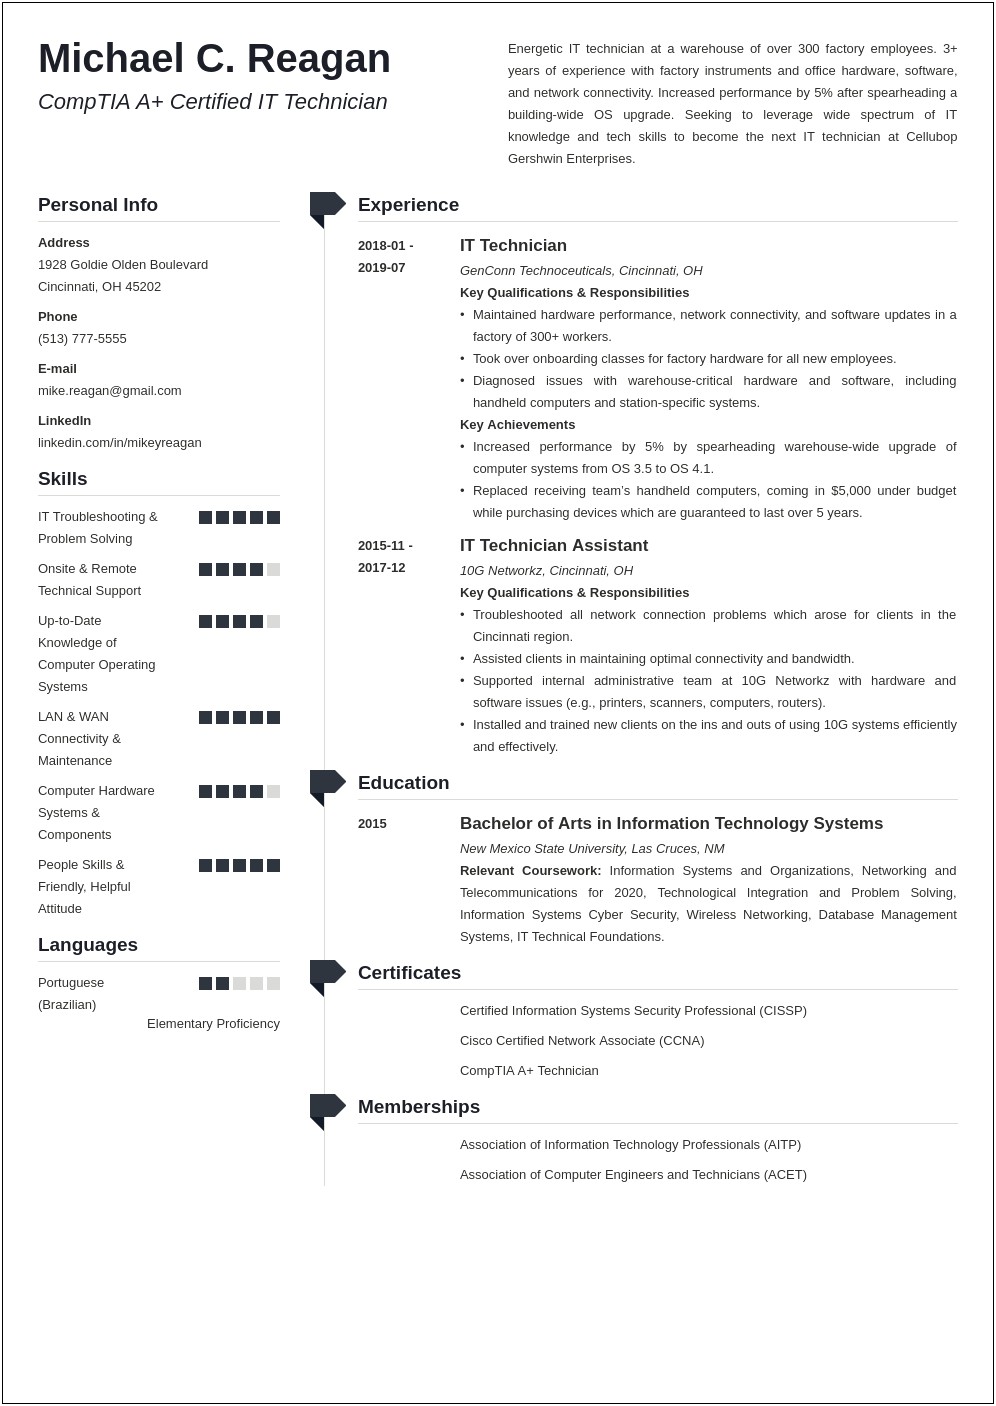 It Support Technician Job Description Resume